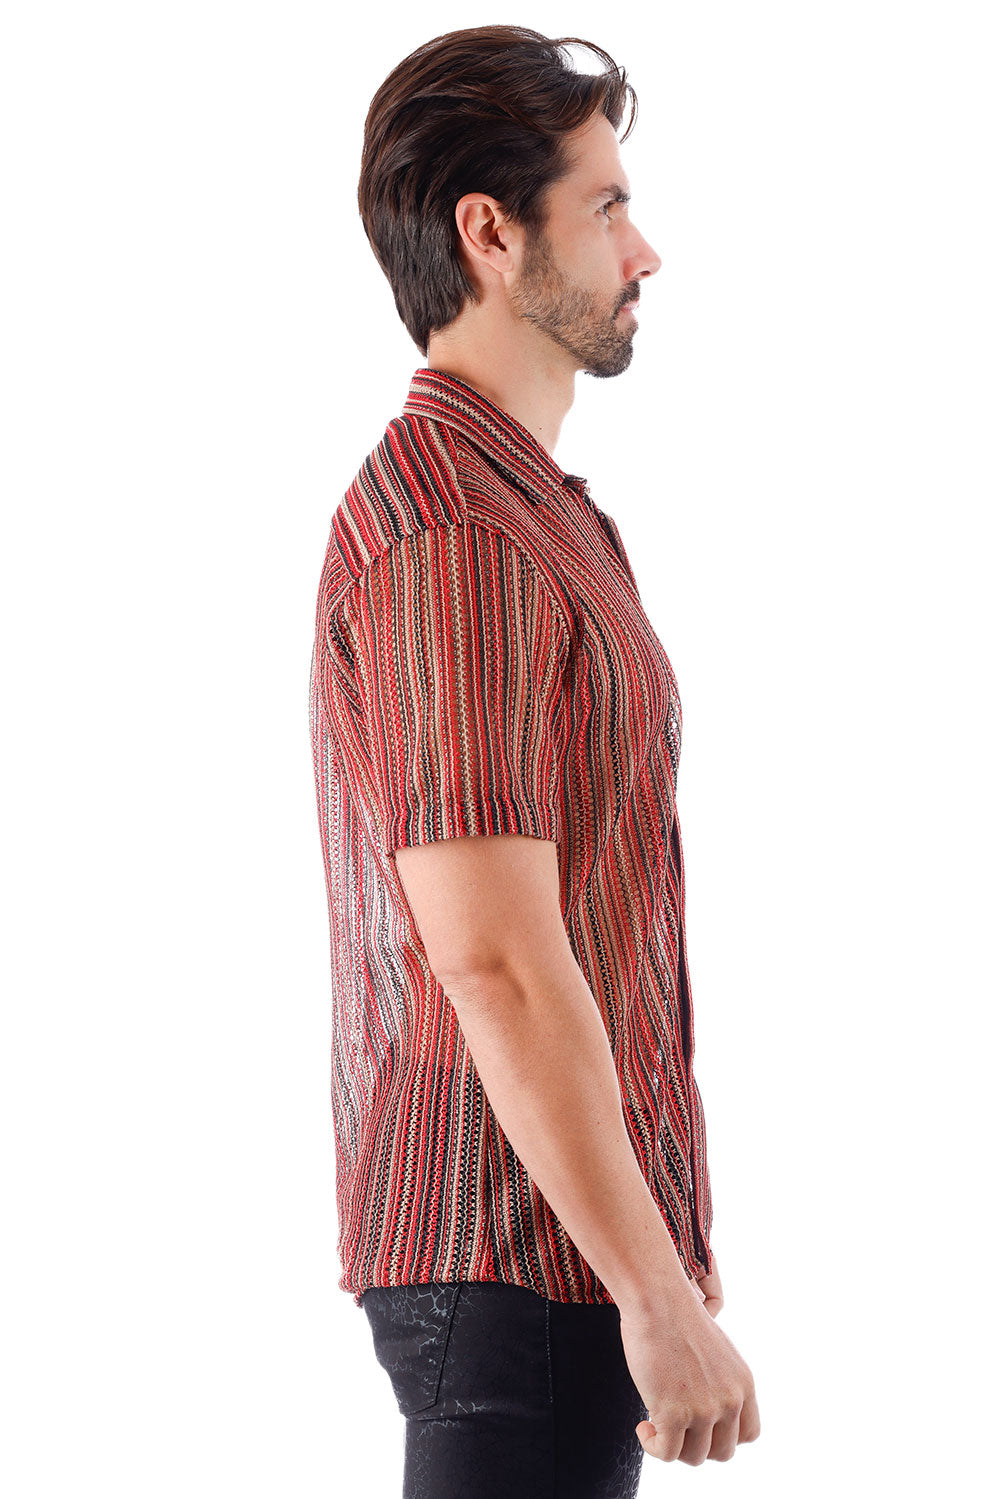 BARABAS Men's Knit Stretch Button Down Short Sleeve Shirts 4SST03 Red